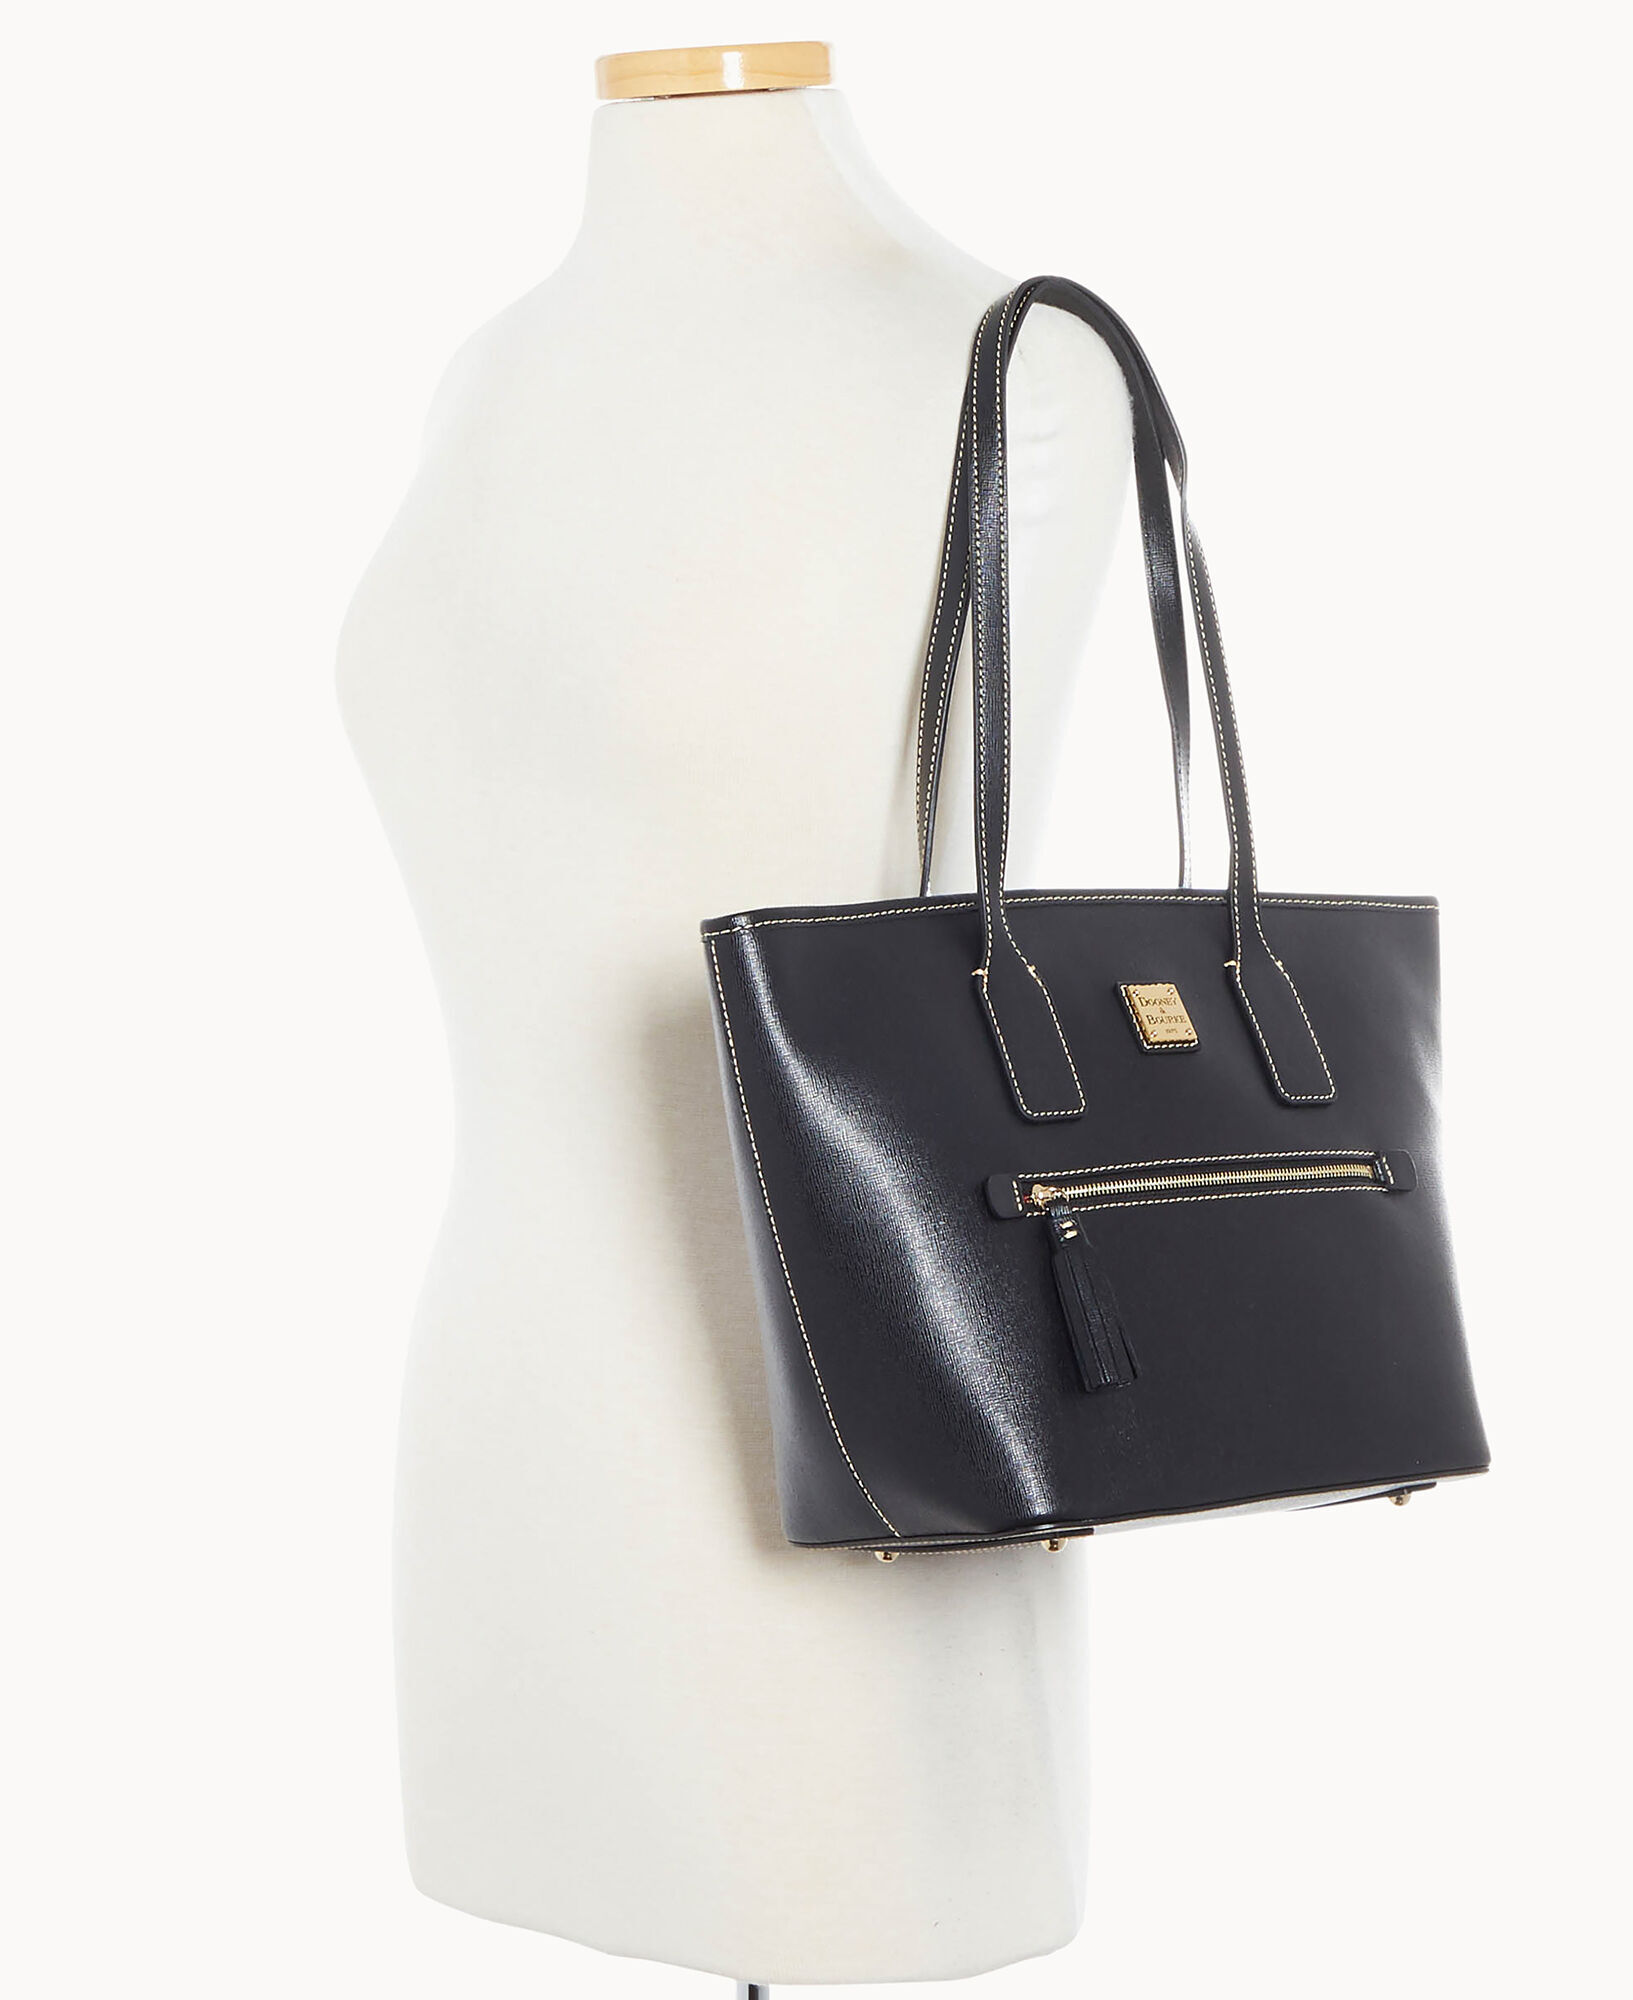 Dooney & Bourke Saffiano Small Tote Handbags Black : One Size